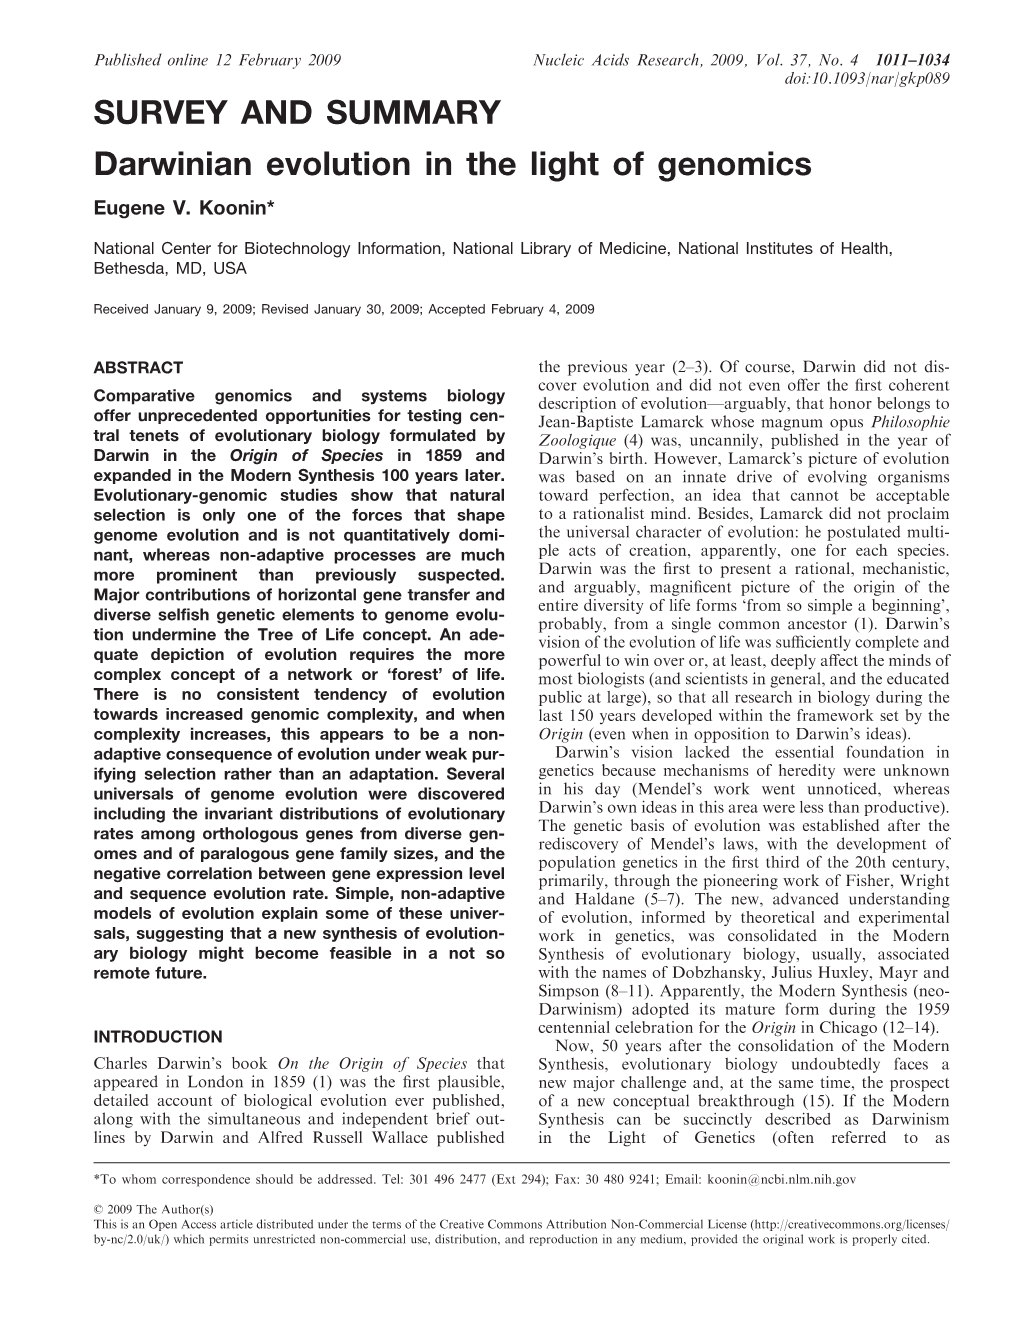 SURVEY and SUMMARY Darwinian Evolution in the Light of Genomics Eugene V